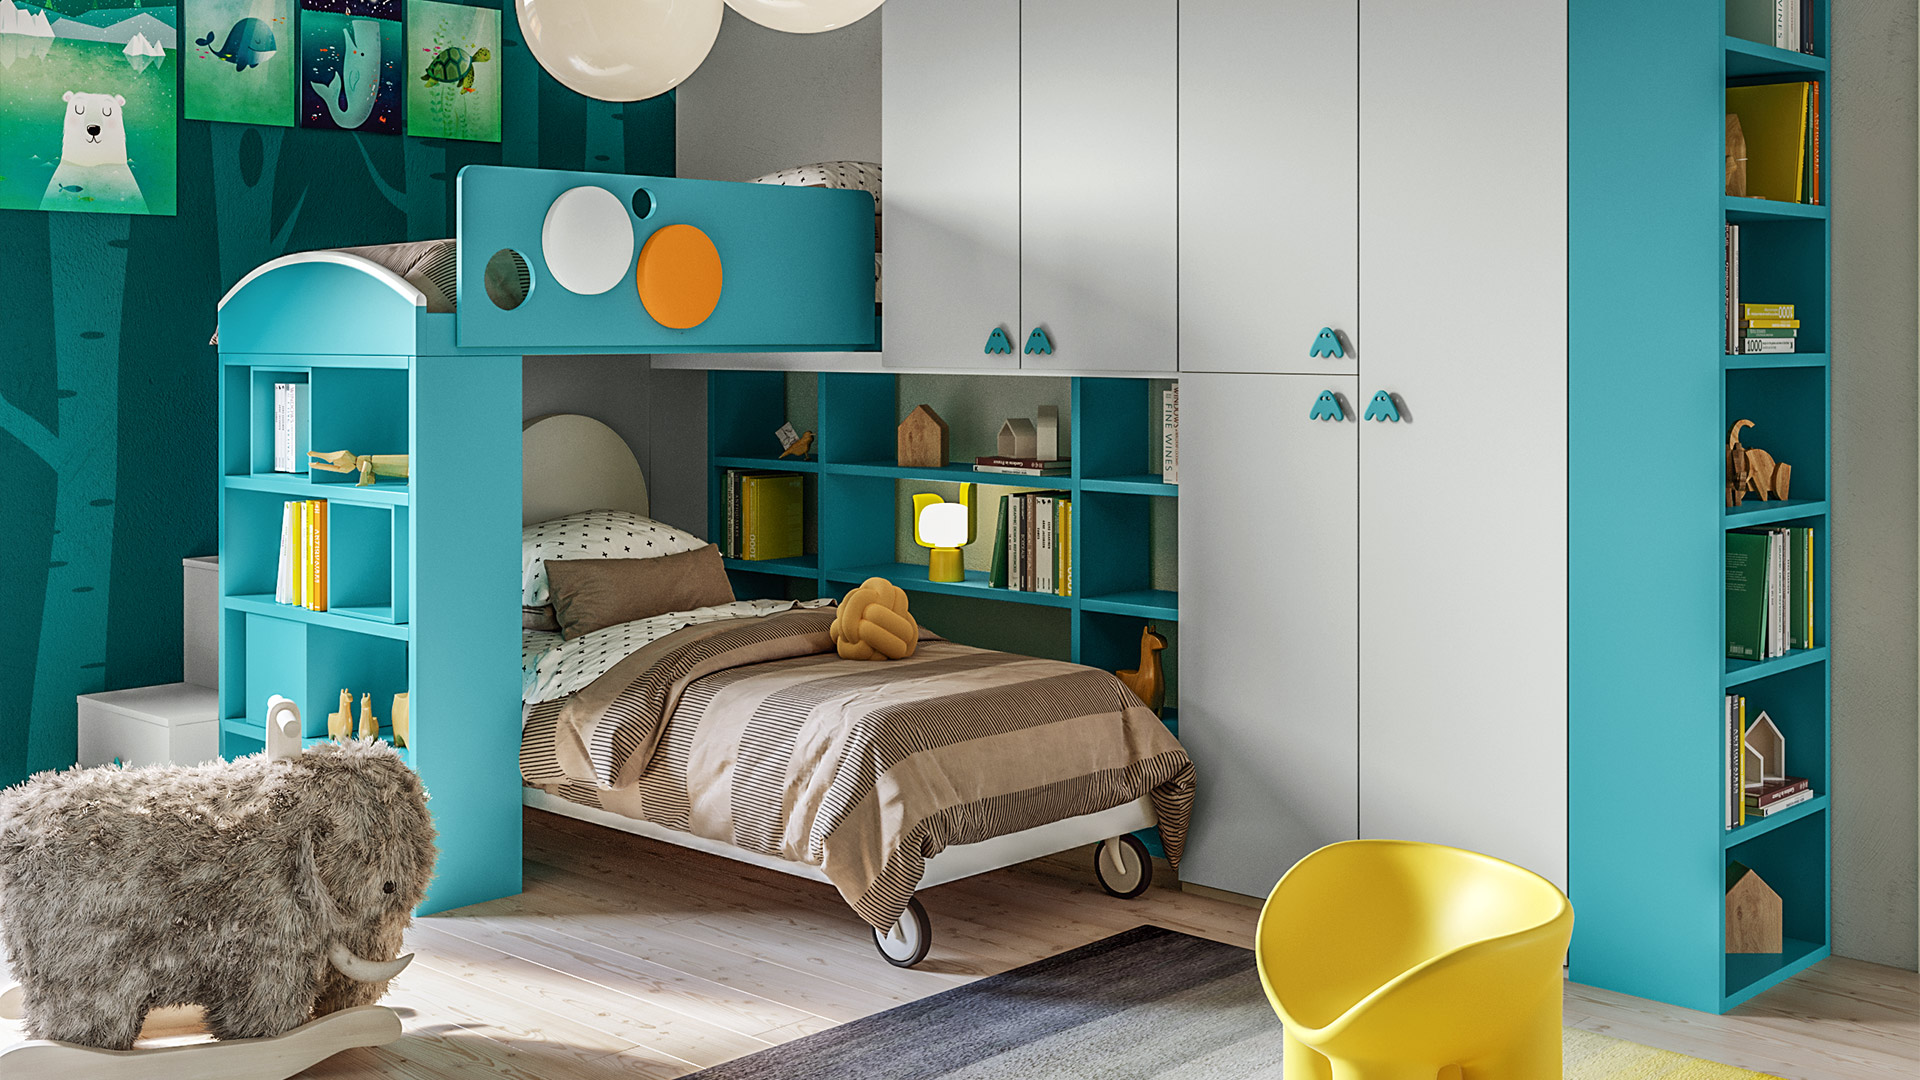 Le lit superposé, la solution pour optimiser l'espace dans la chambre - Giessegi - Qualità e risparmio hanno trovato casa.	